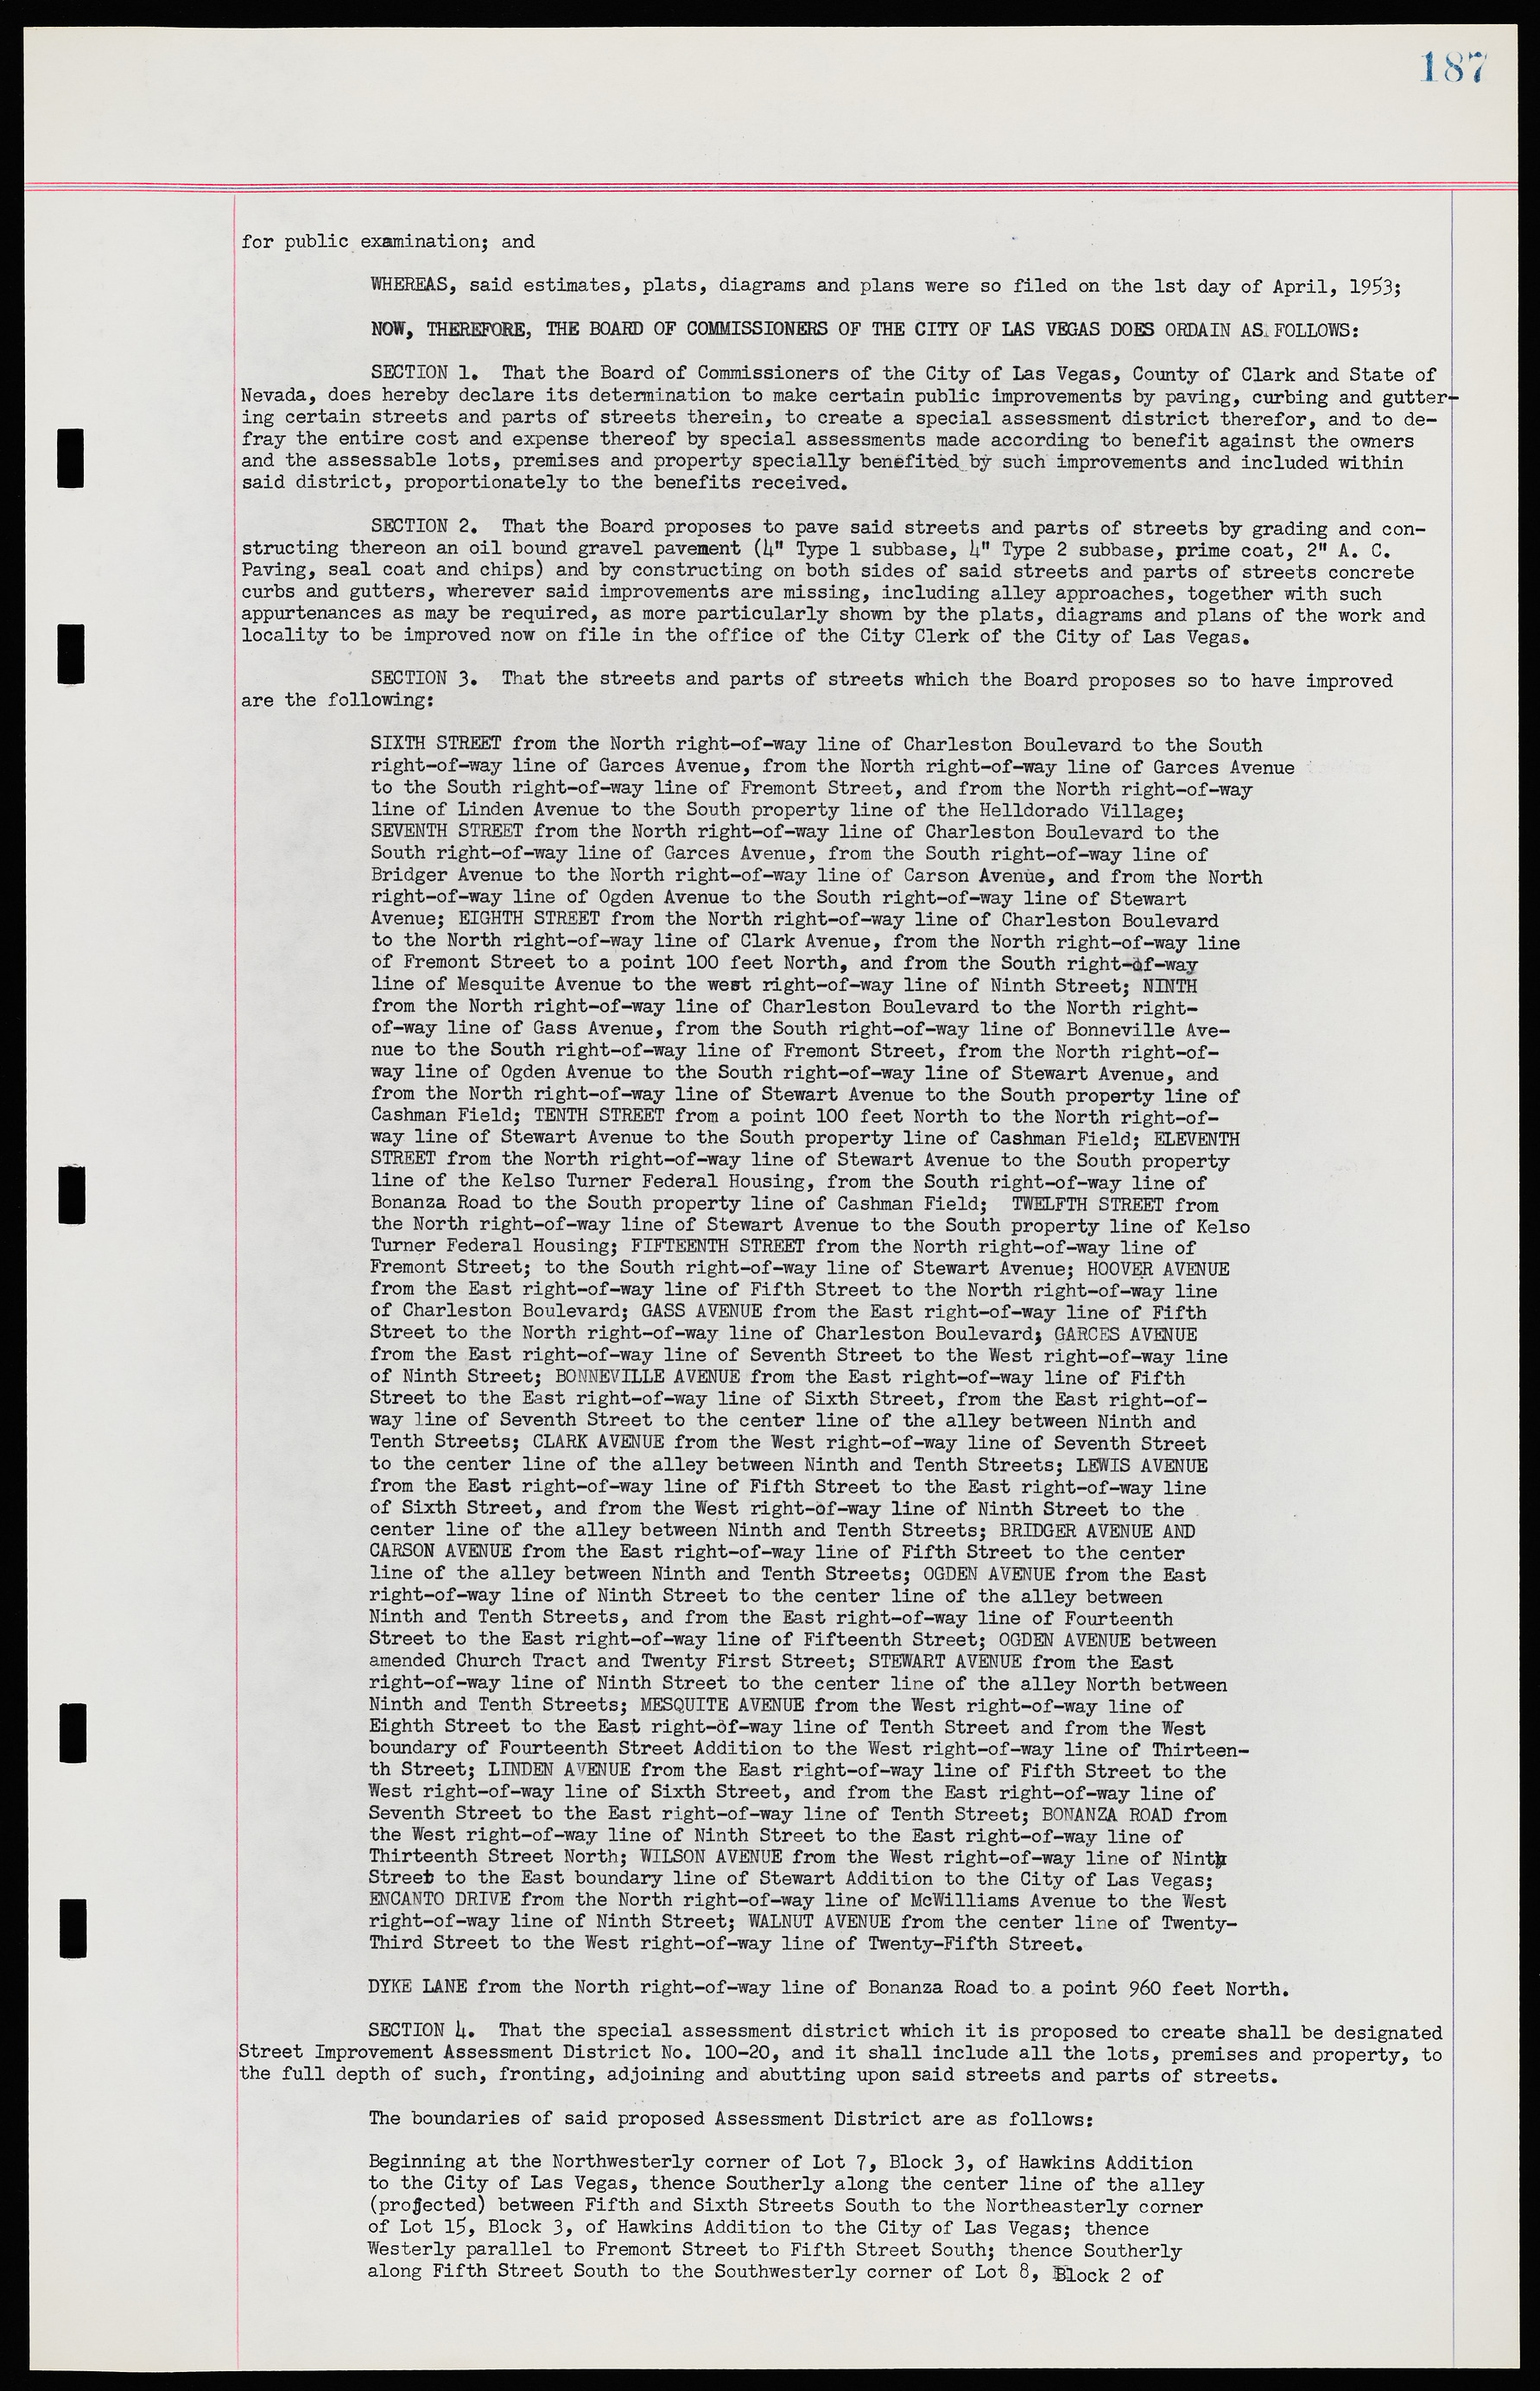 Las Vegas City Ordinances, November 13, 1950 to August 6, 1958, lvc000015-195